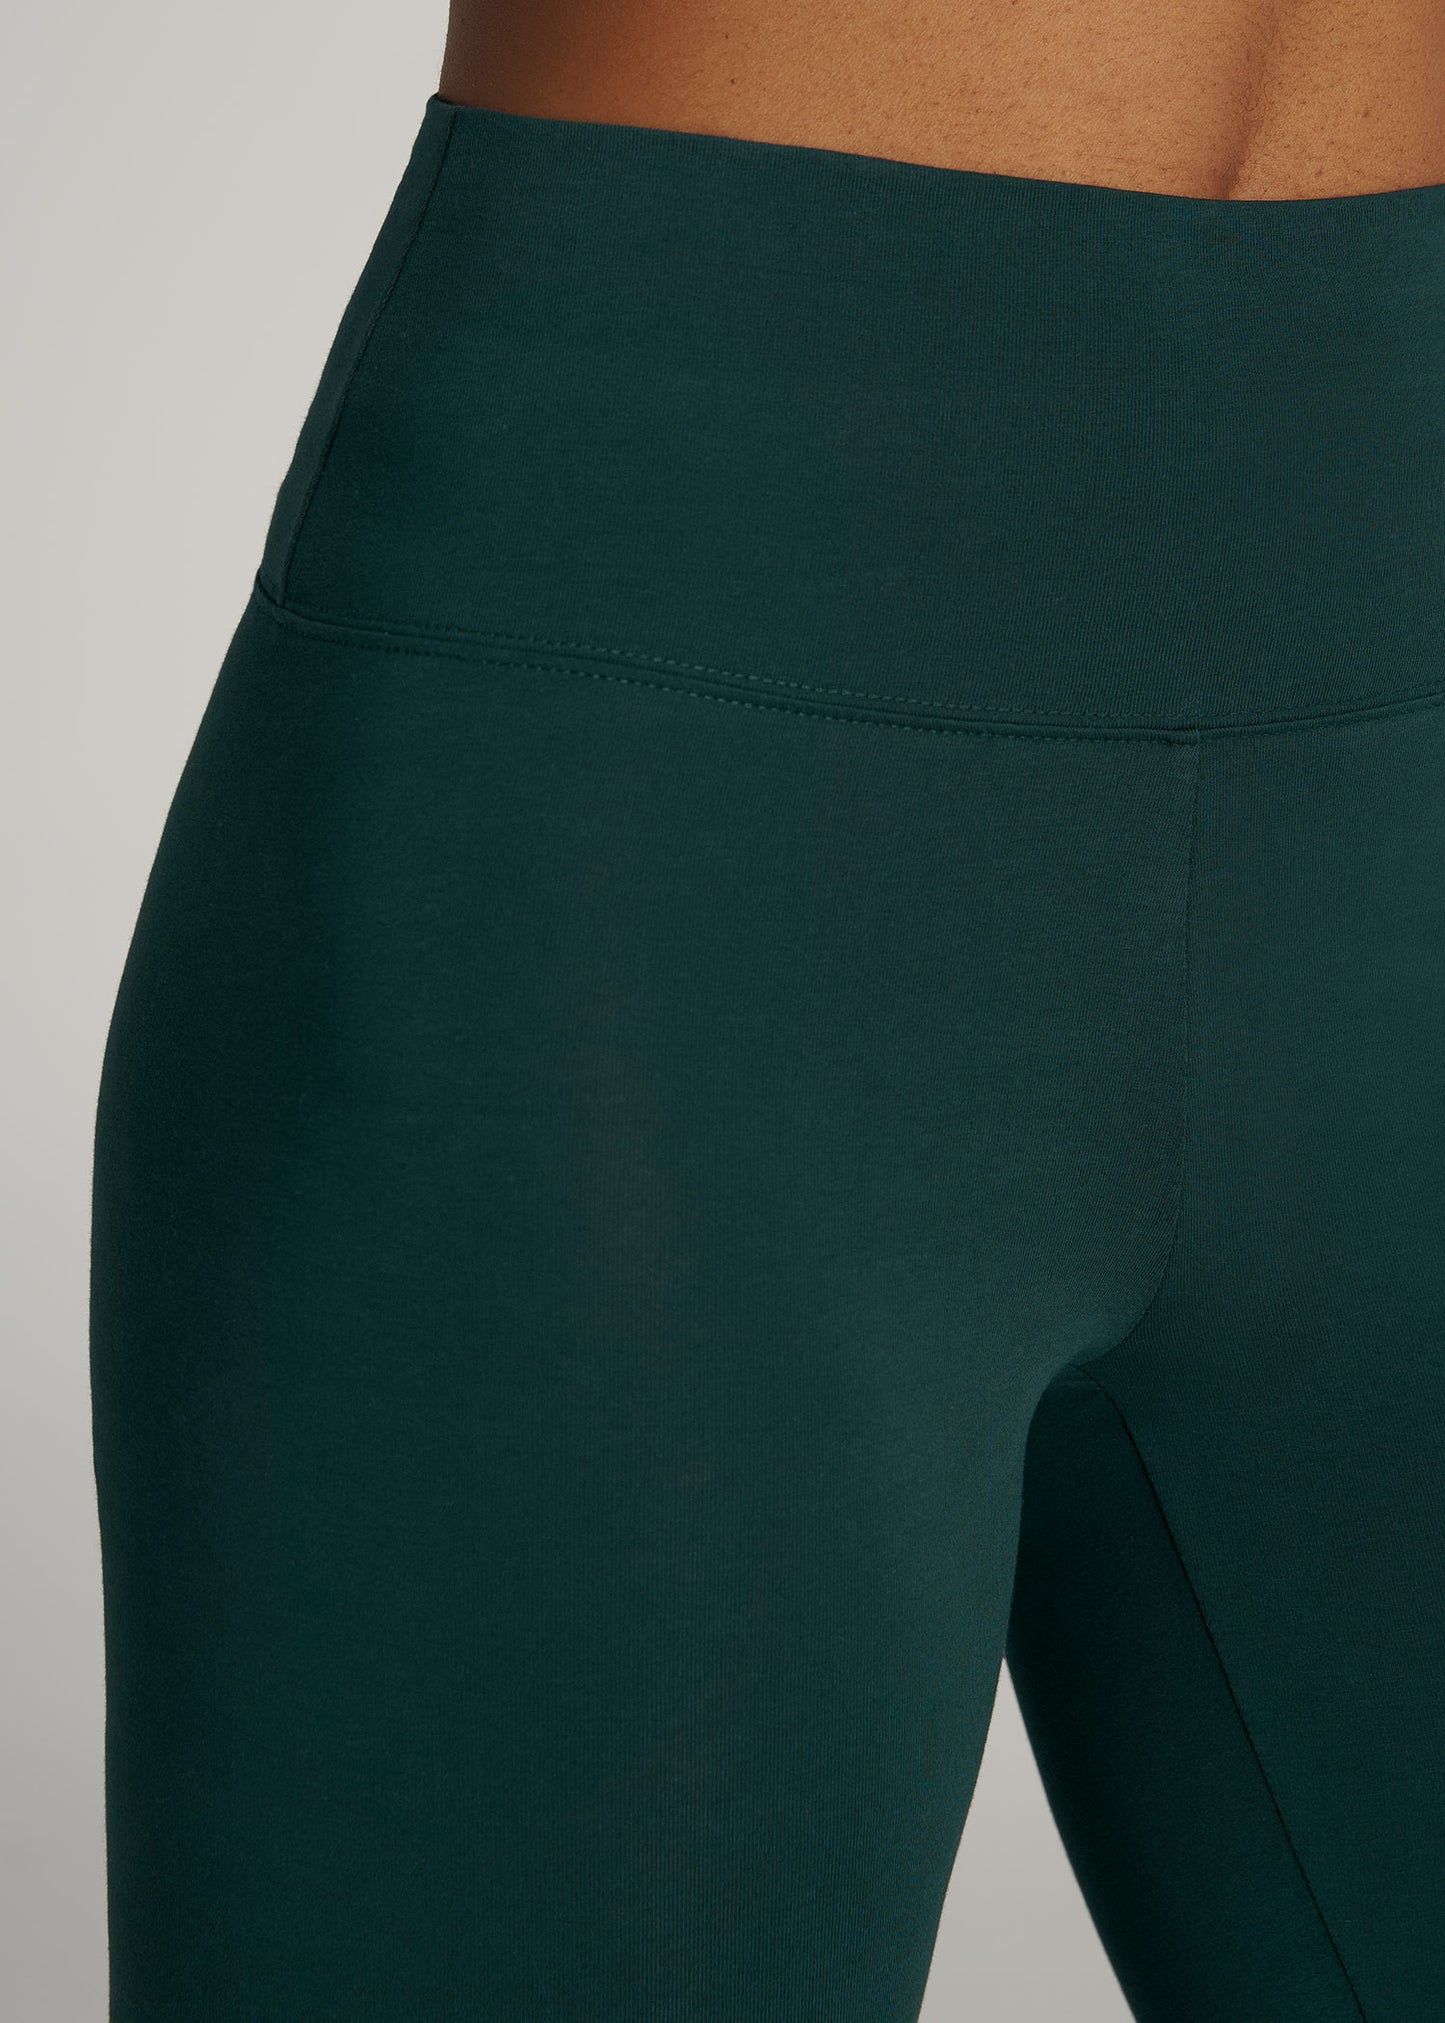 Women's Tall Cotton Leggings Emerald